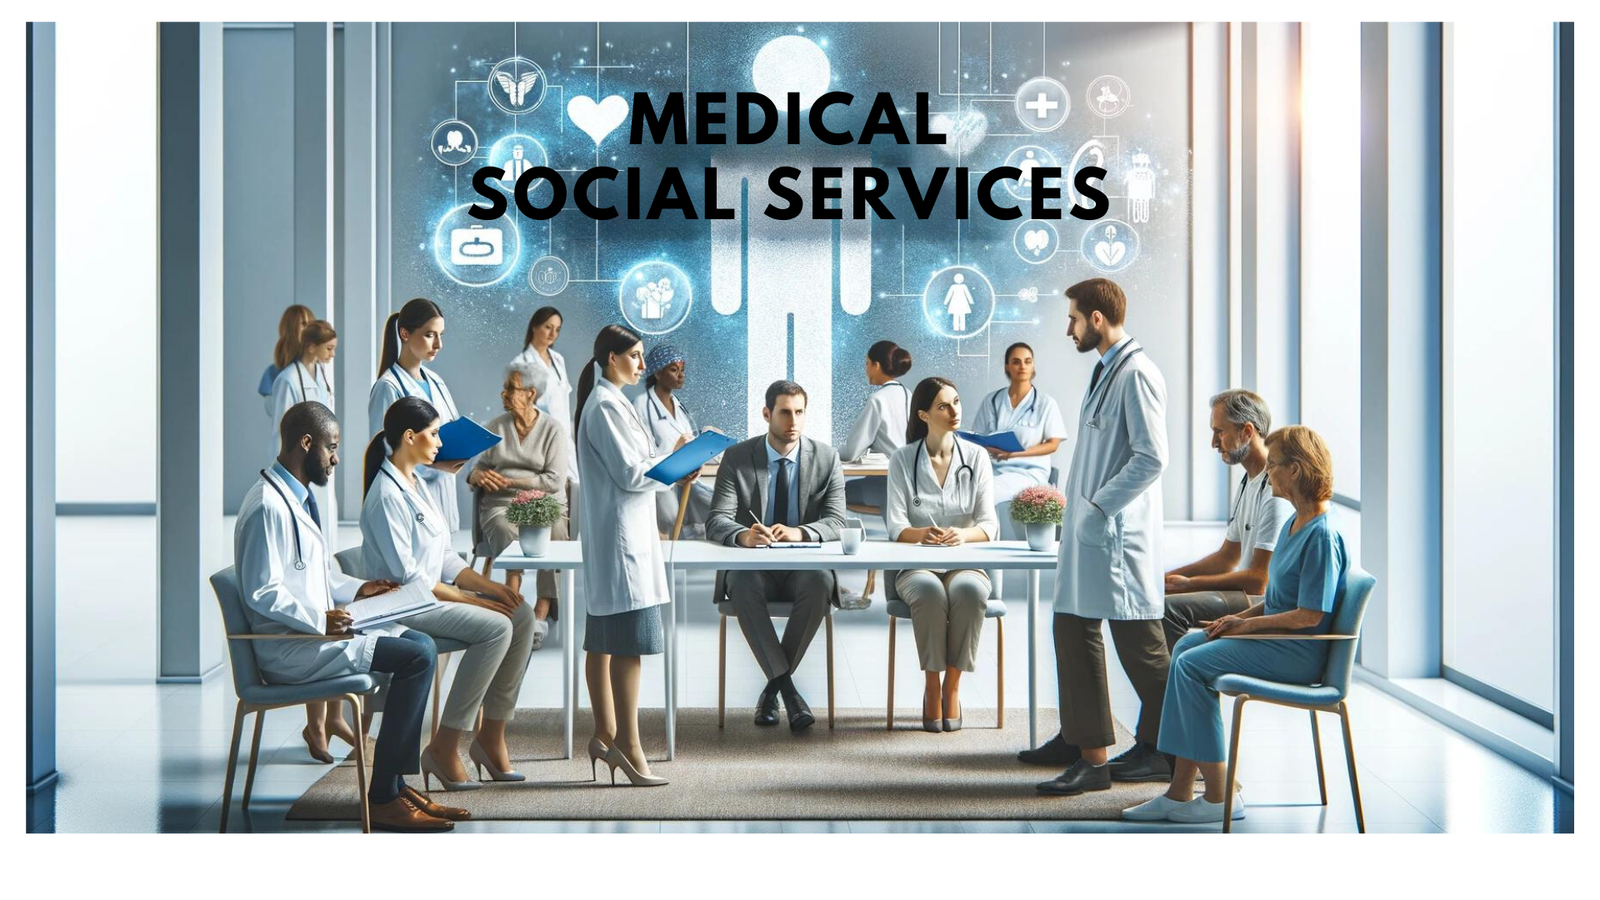 Medical social services 